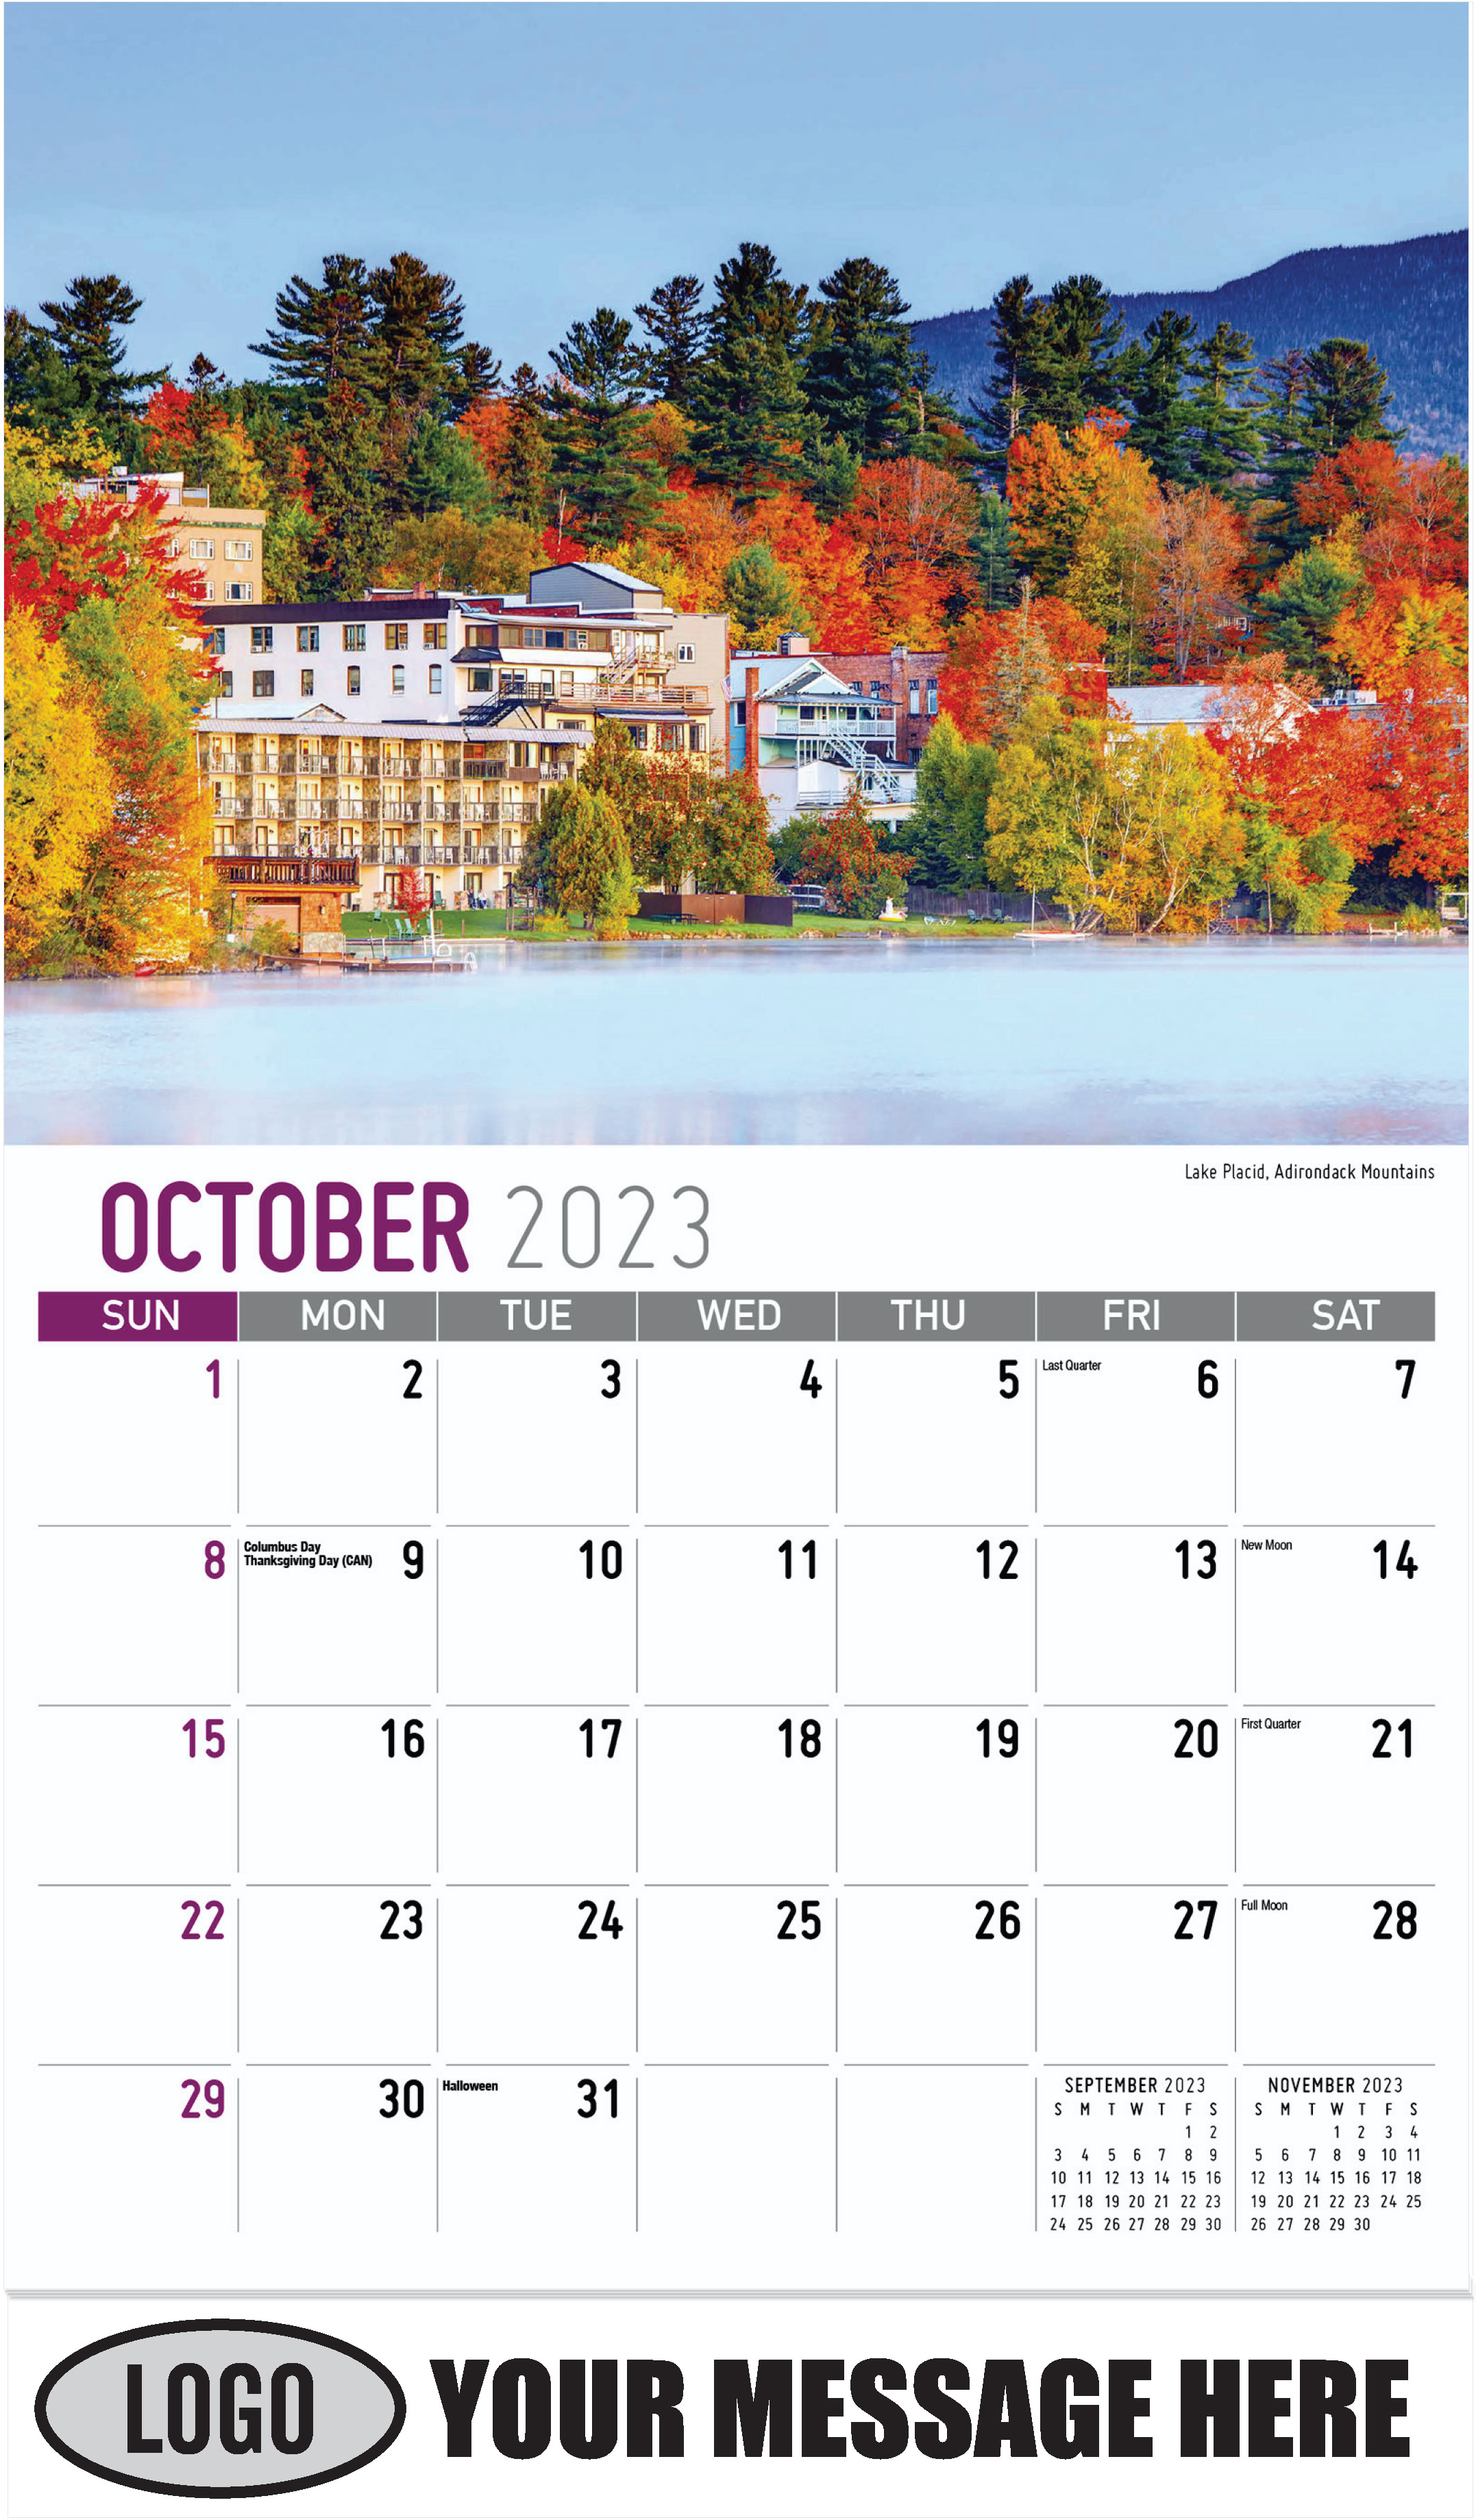 Lake Placid, Adirondack Mountains - October - Scenes of New York 2023 Promotional Calendar